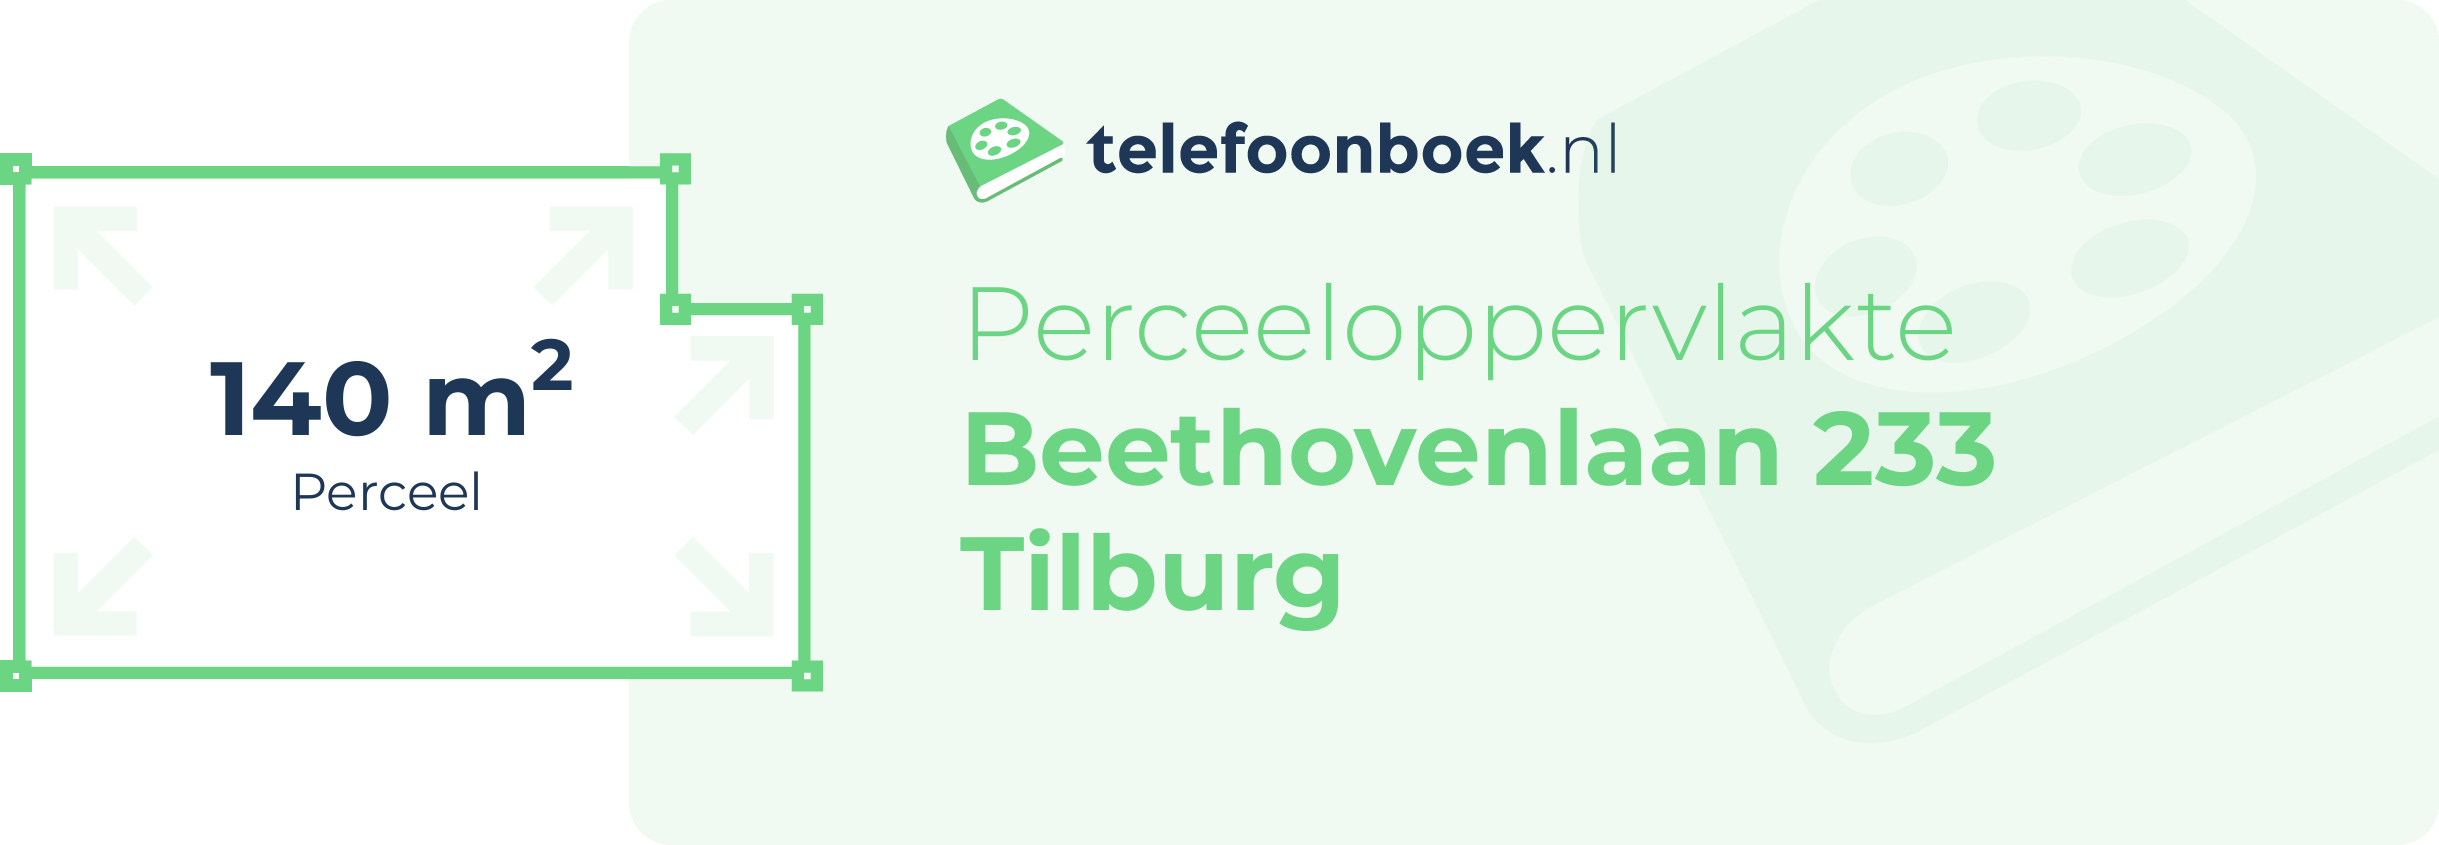 Perceeloppervlakte Beethovenlaan 233 Tilburg